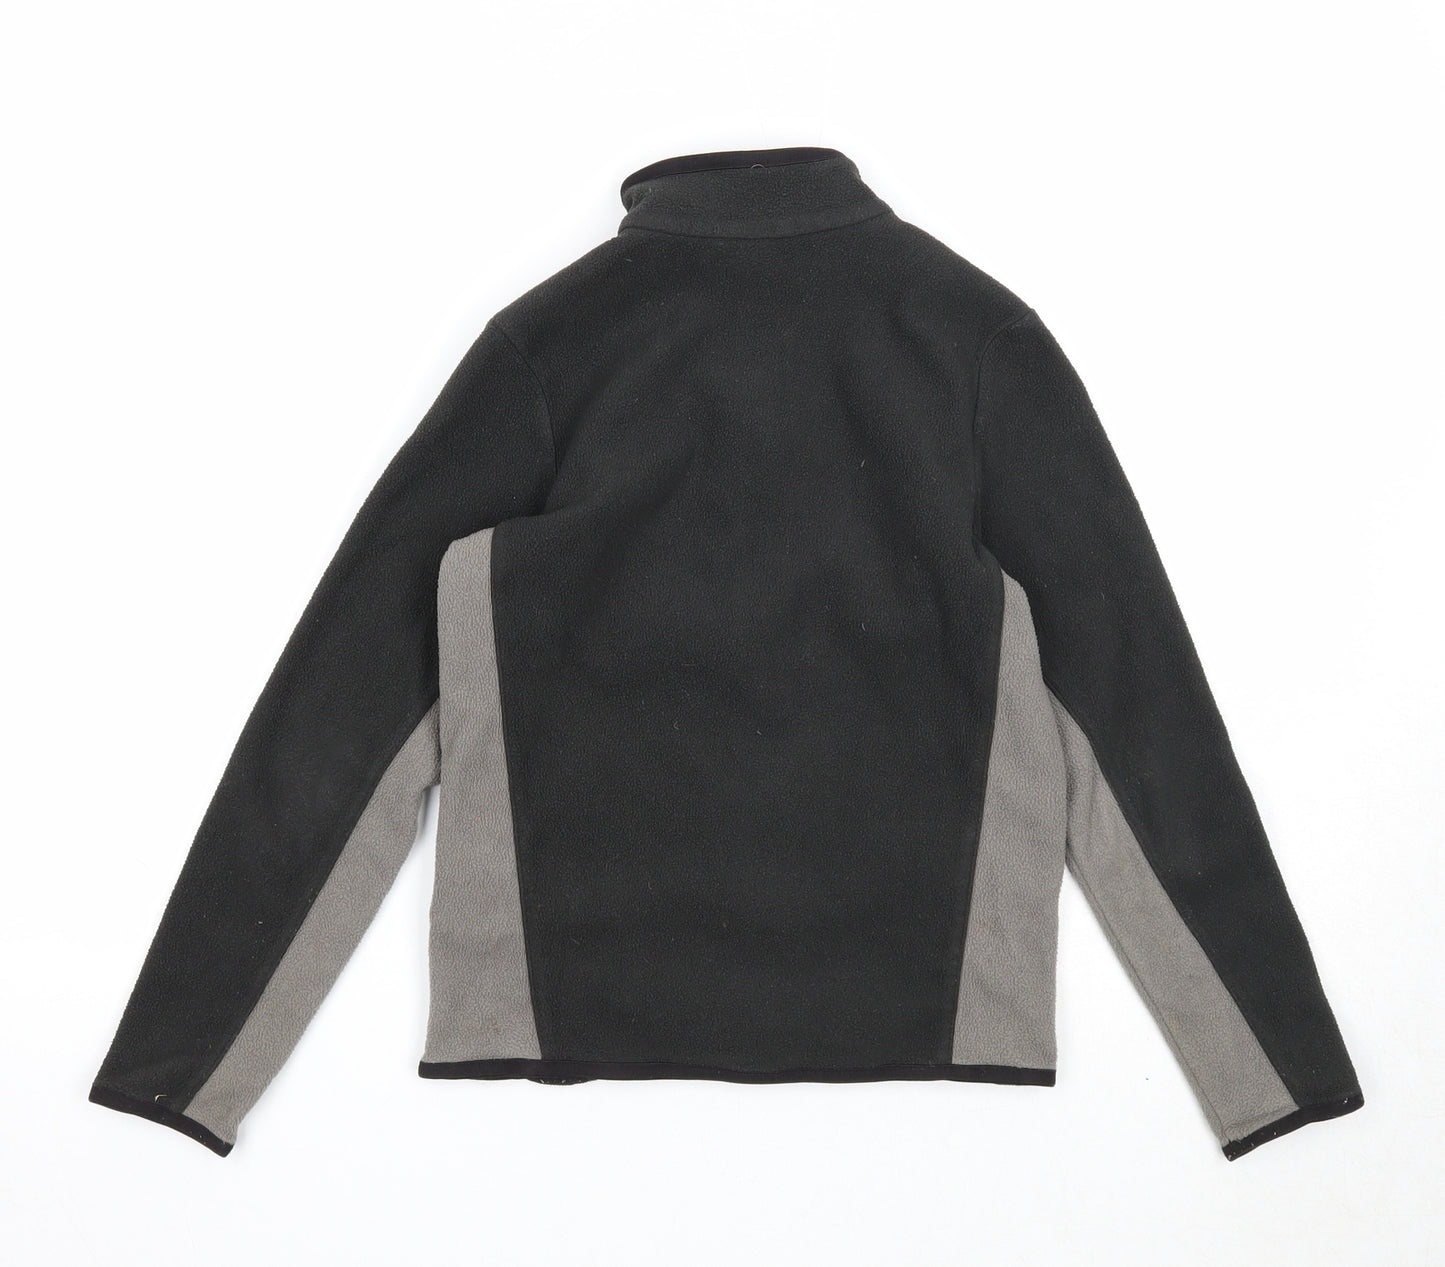 Quechua Boys Grey Geometric Jacket Size 10 Years Zip